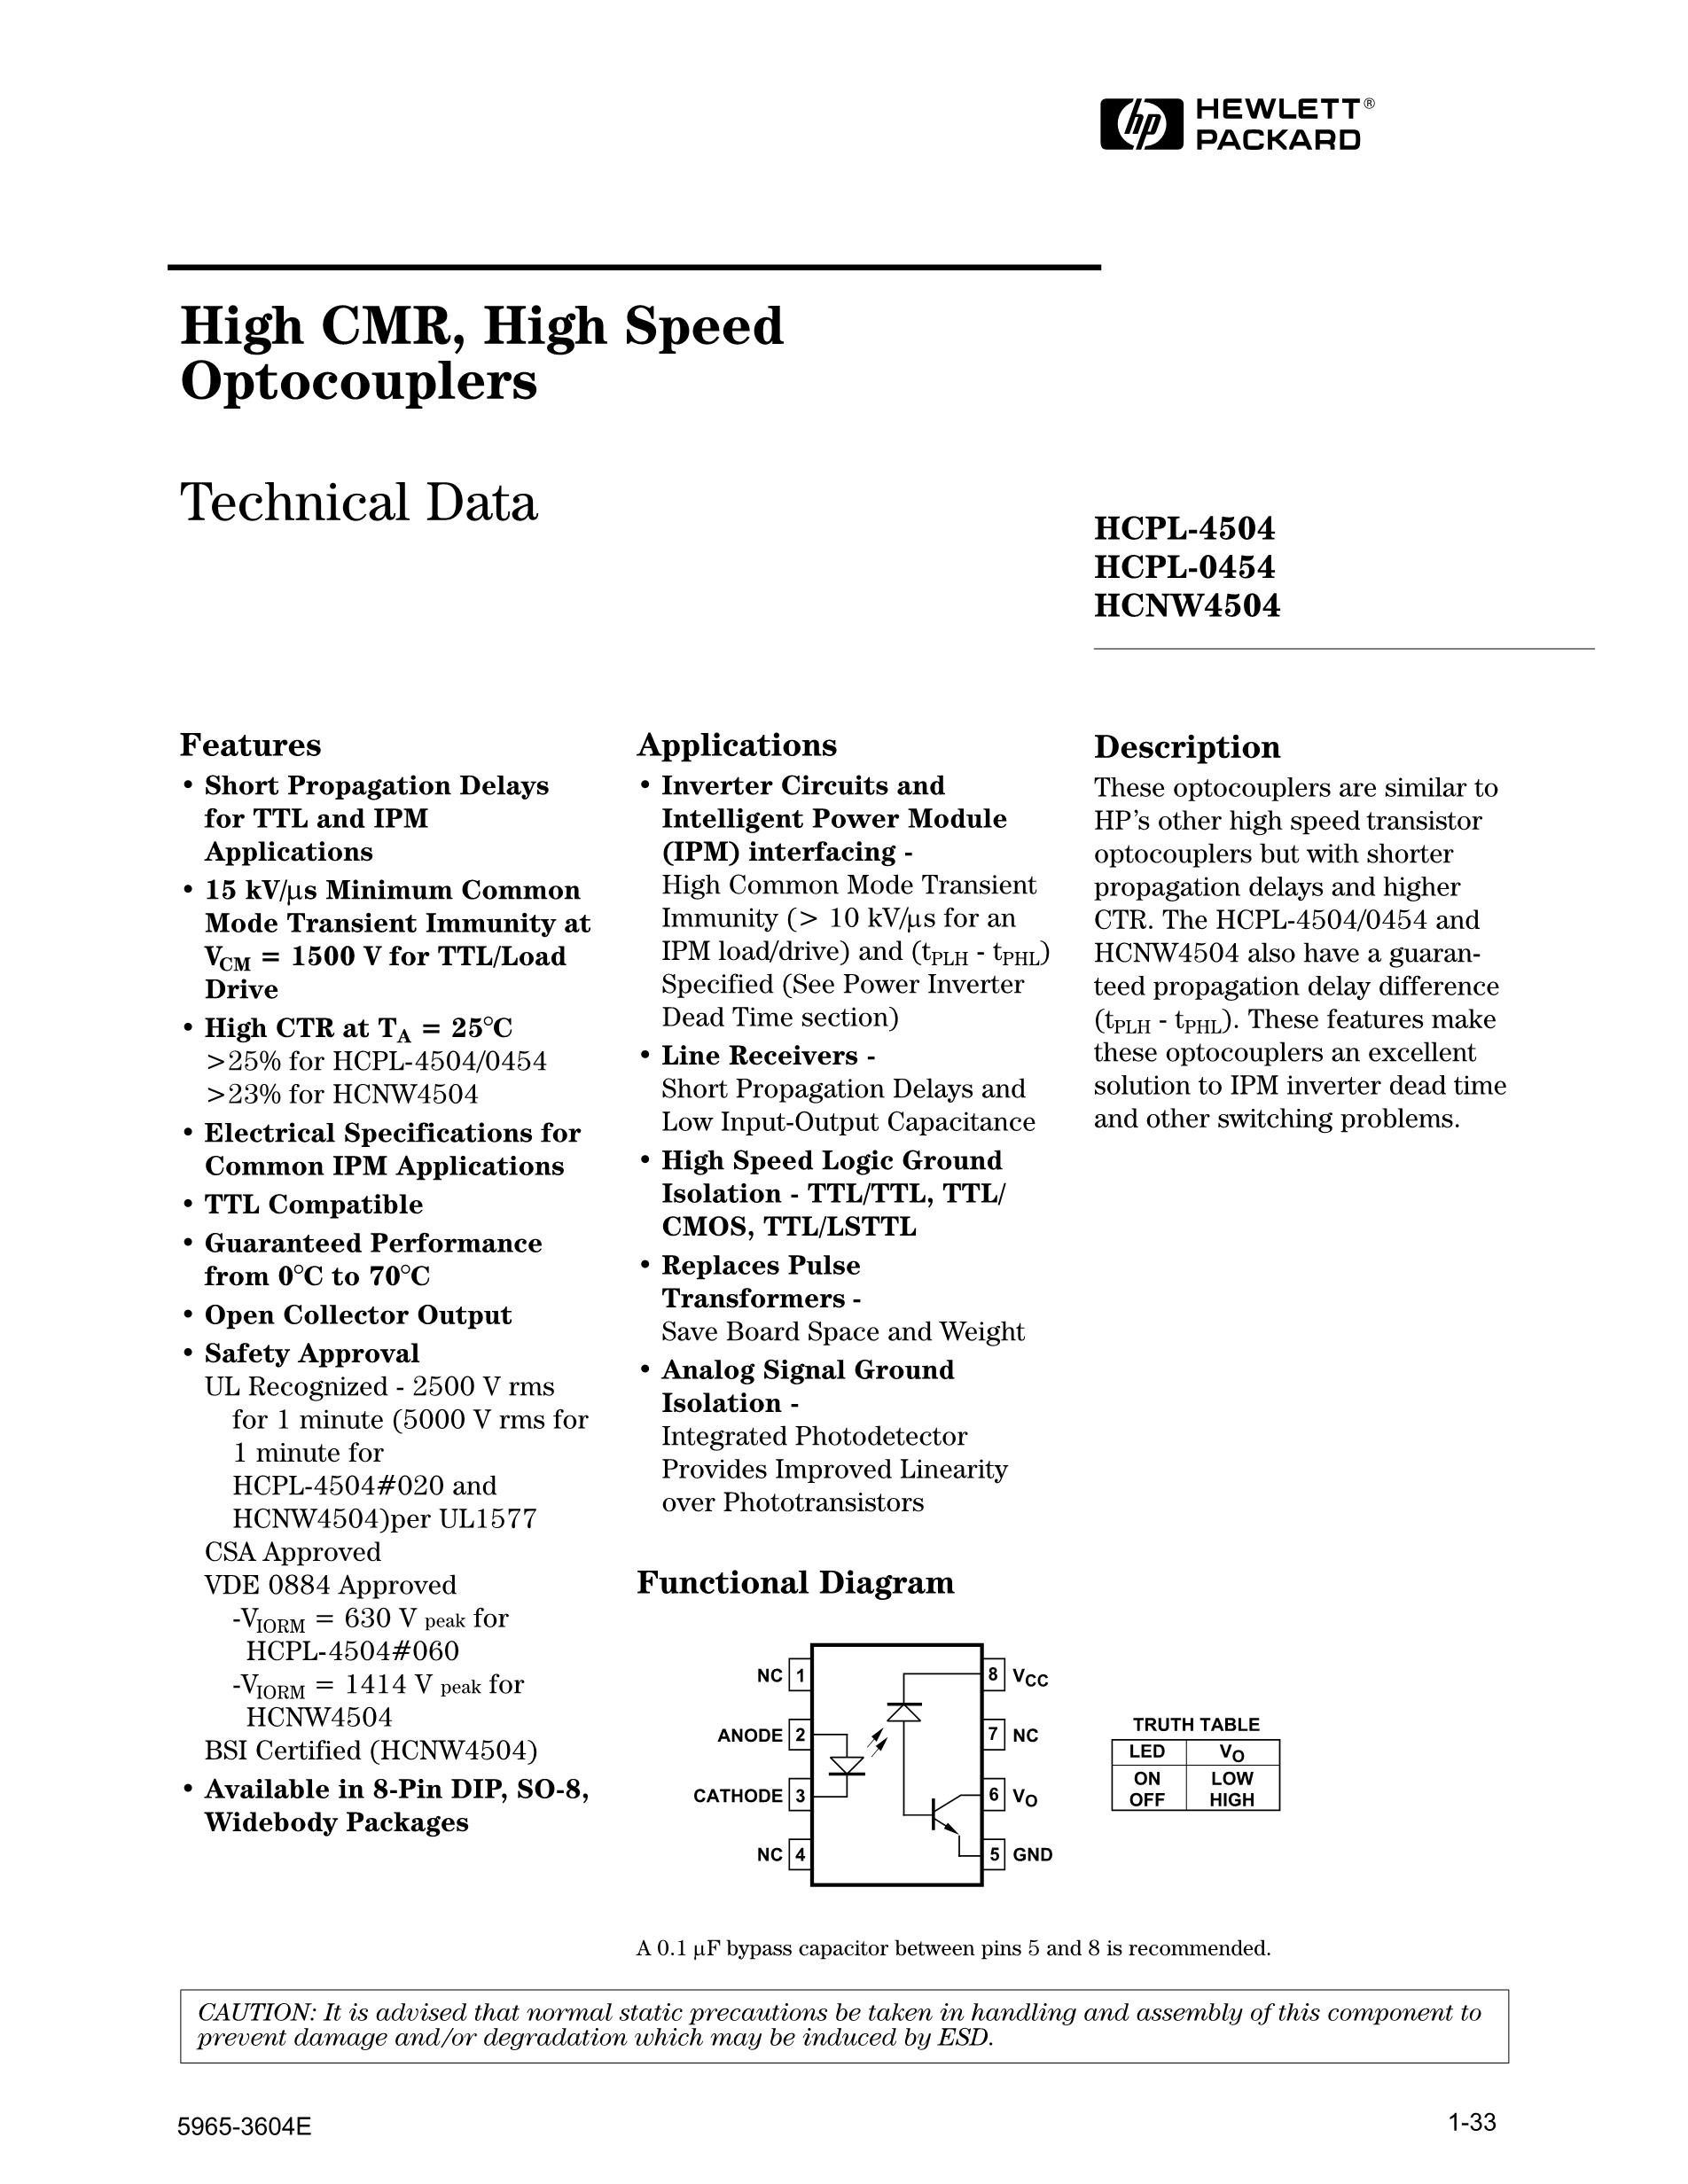 HCNW4503.'s pdf picture 1